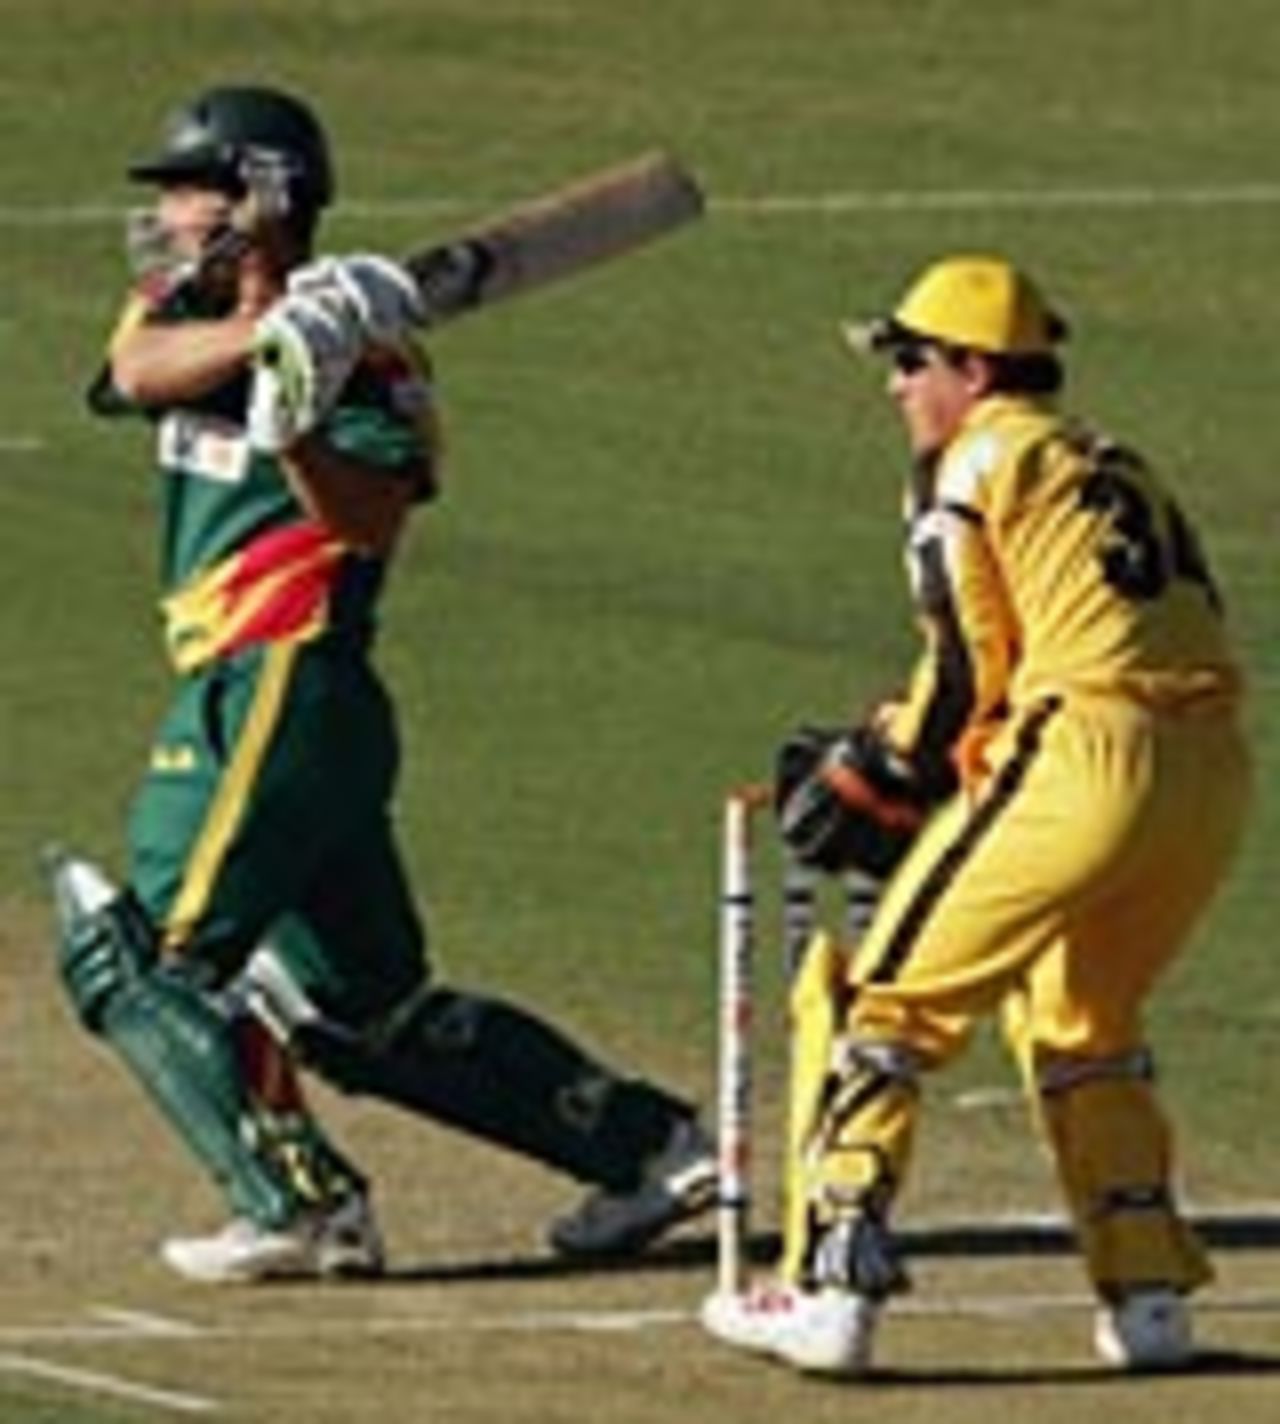 Daniel Marsh on his way to 106, Western Australia v Tasmania, ING Cup, Perth, October 15, 2004